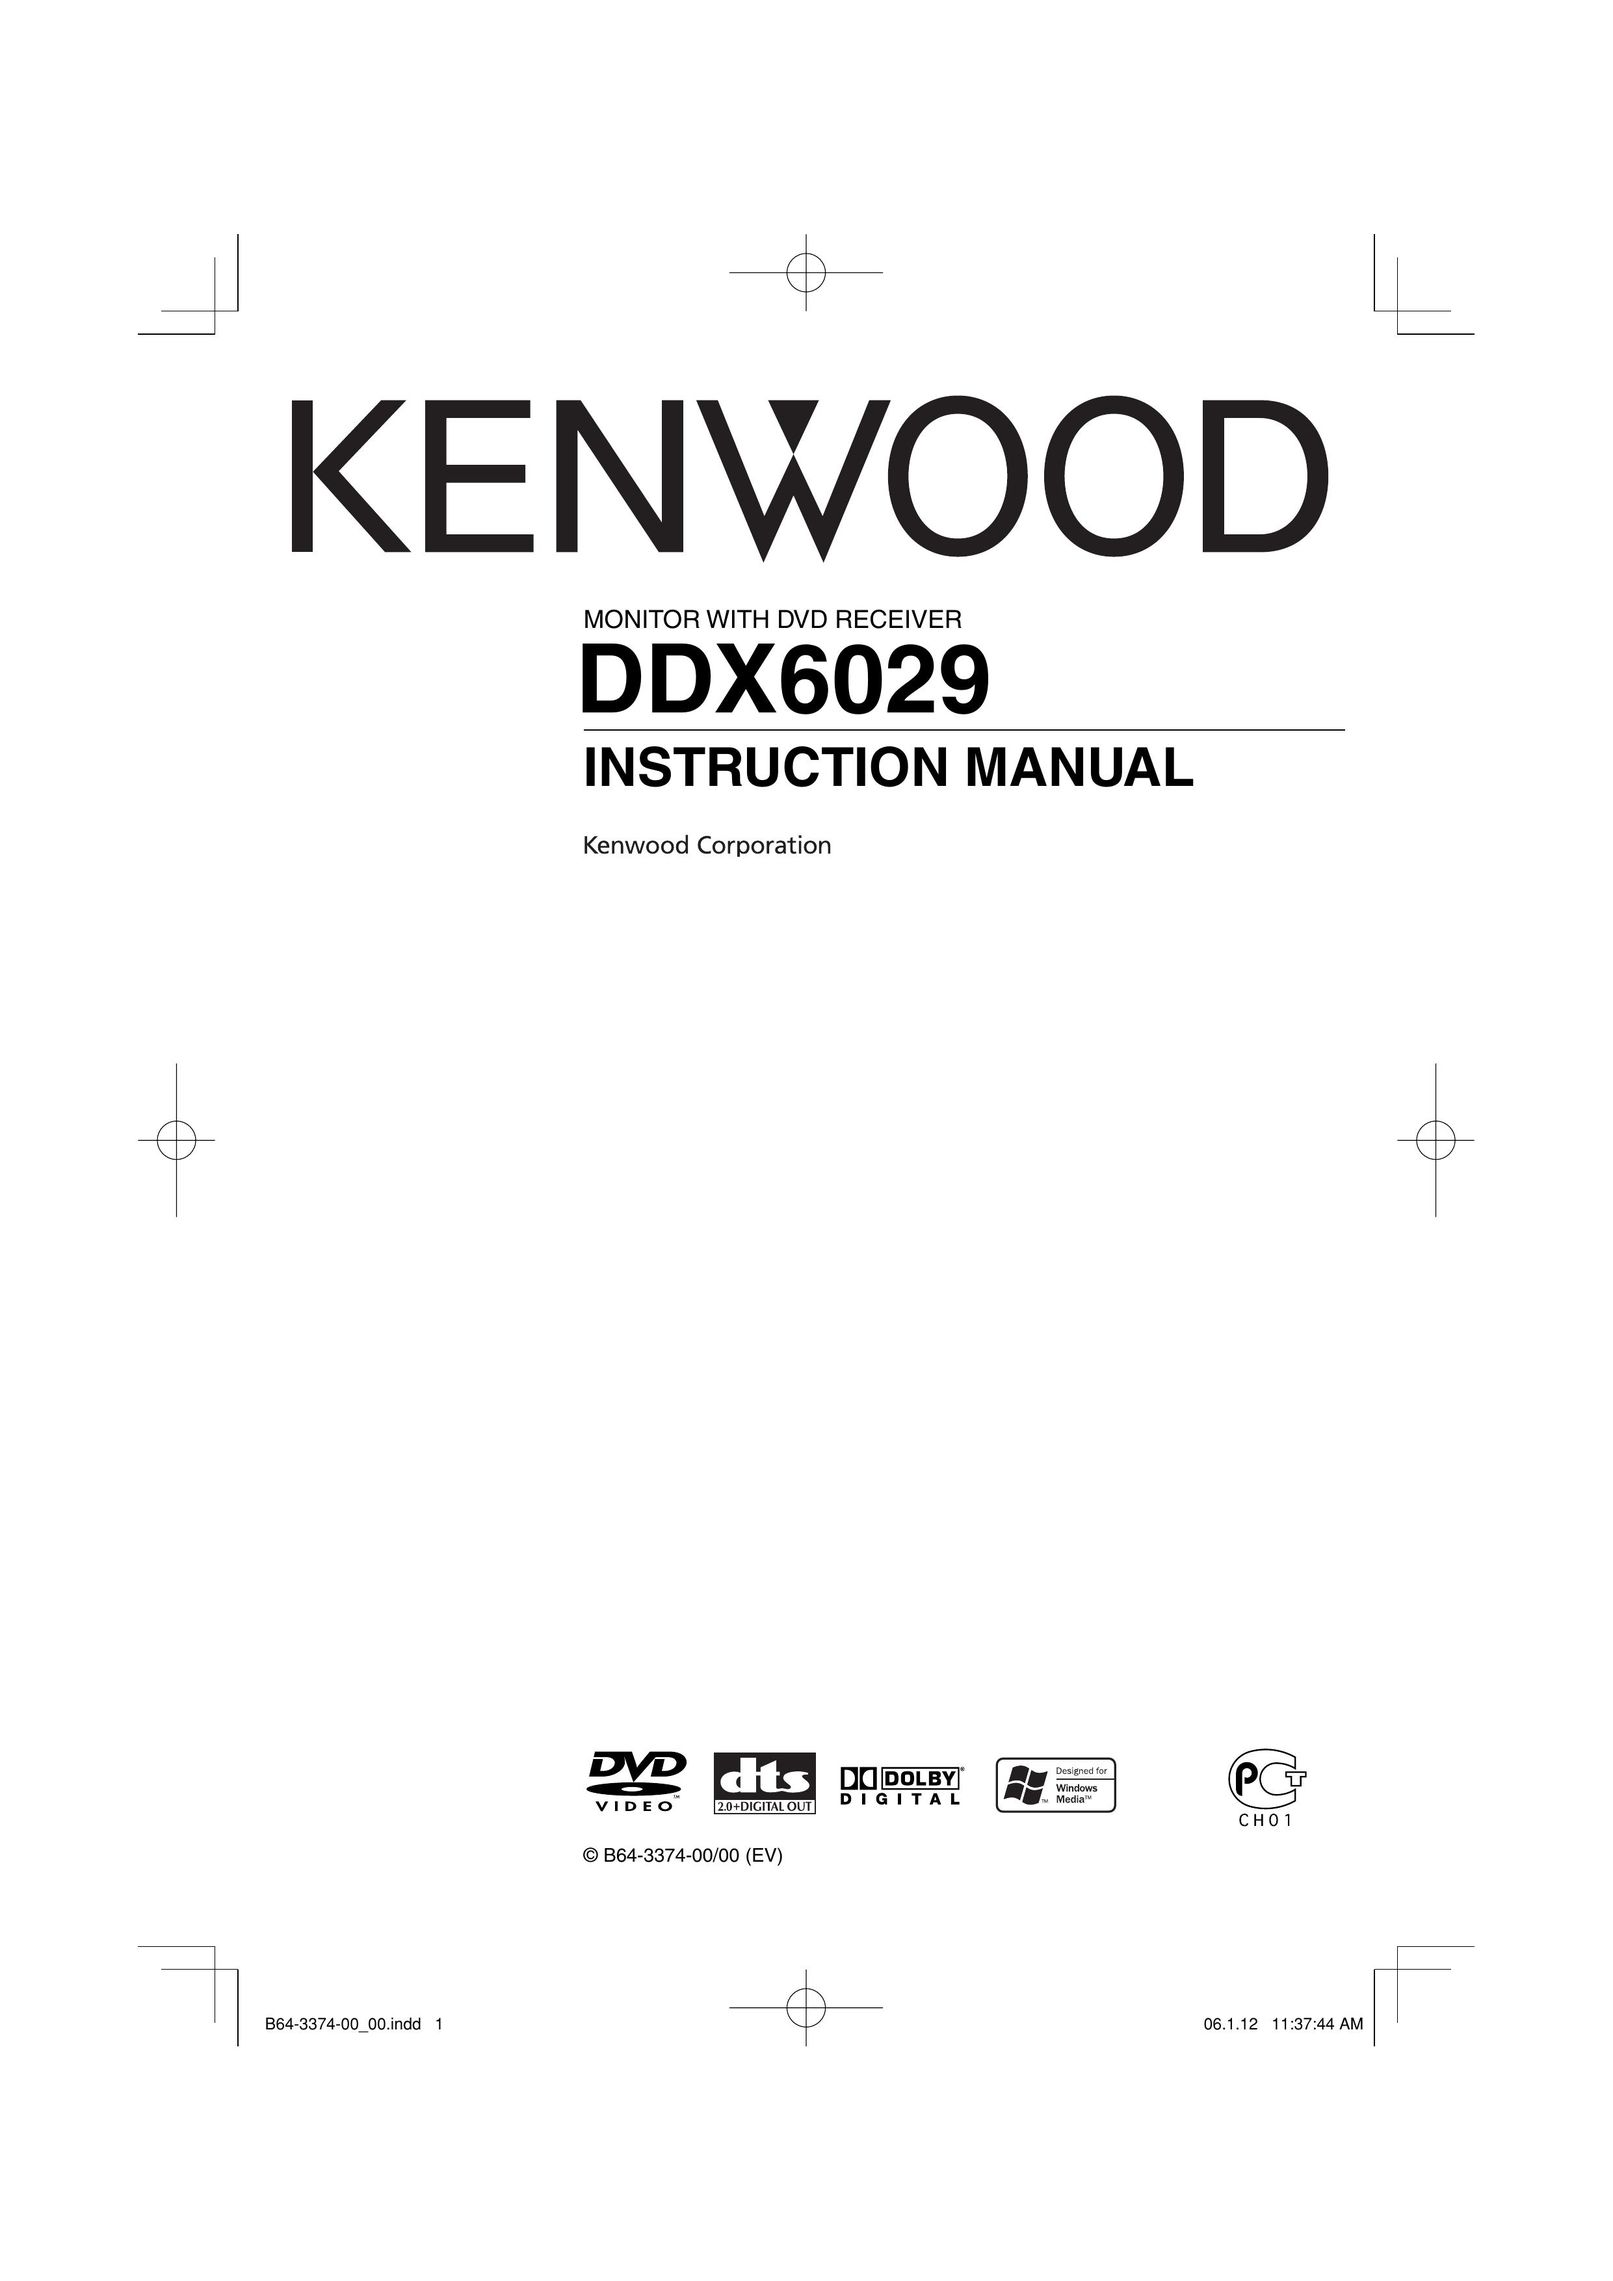 Kenwood DDX6029 Computer Monitor User Manual